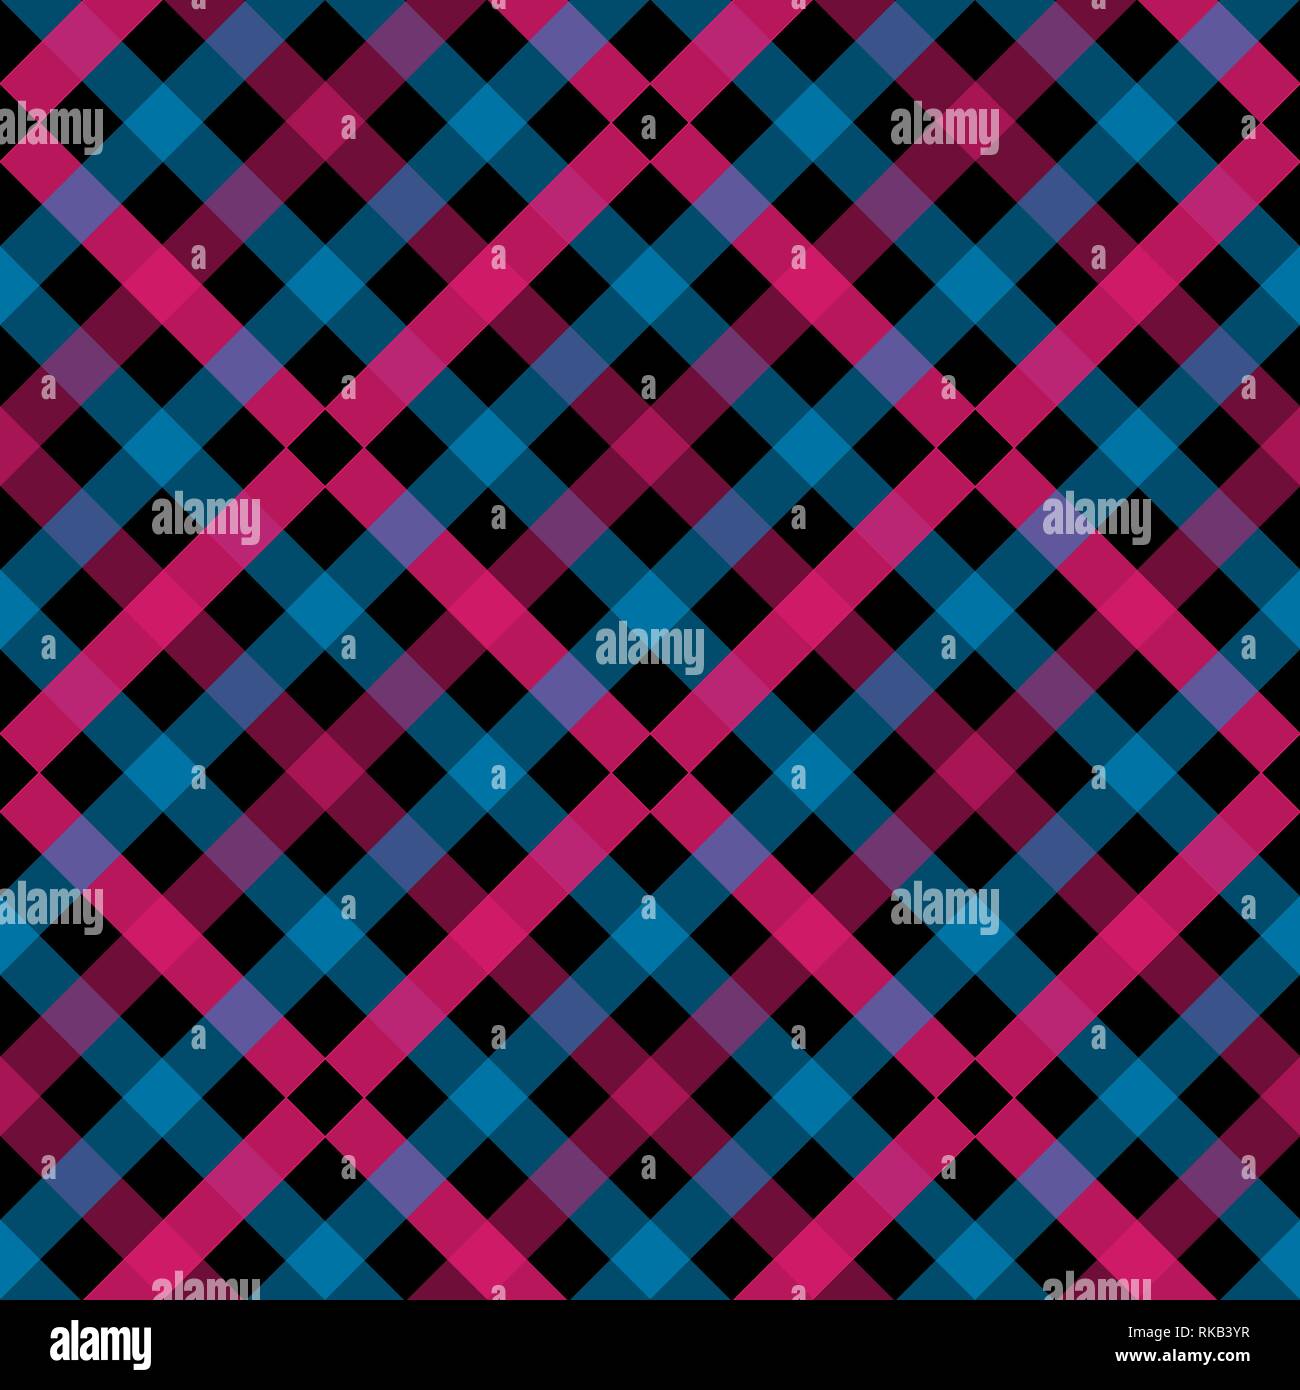 Seamless plaid tartan pattern. Tessuto a scacchi texture stampa in  sfumature di rosso, luminoso fucsia, luce verde teal, ciano pallido e blu  Immagine e Vettoriale - Alamy